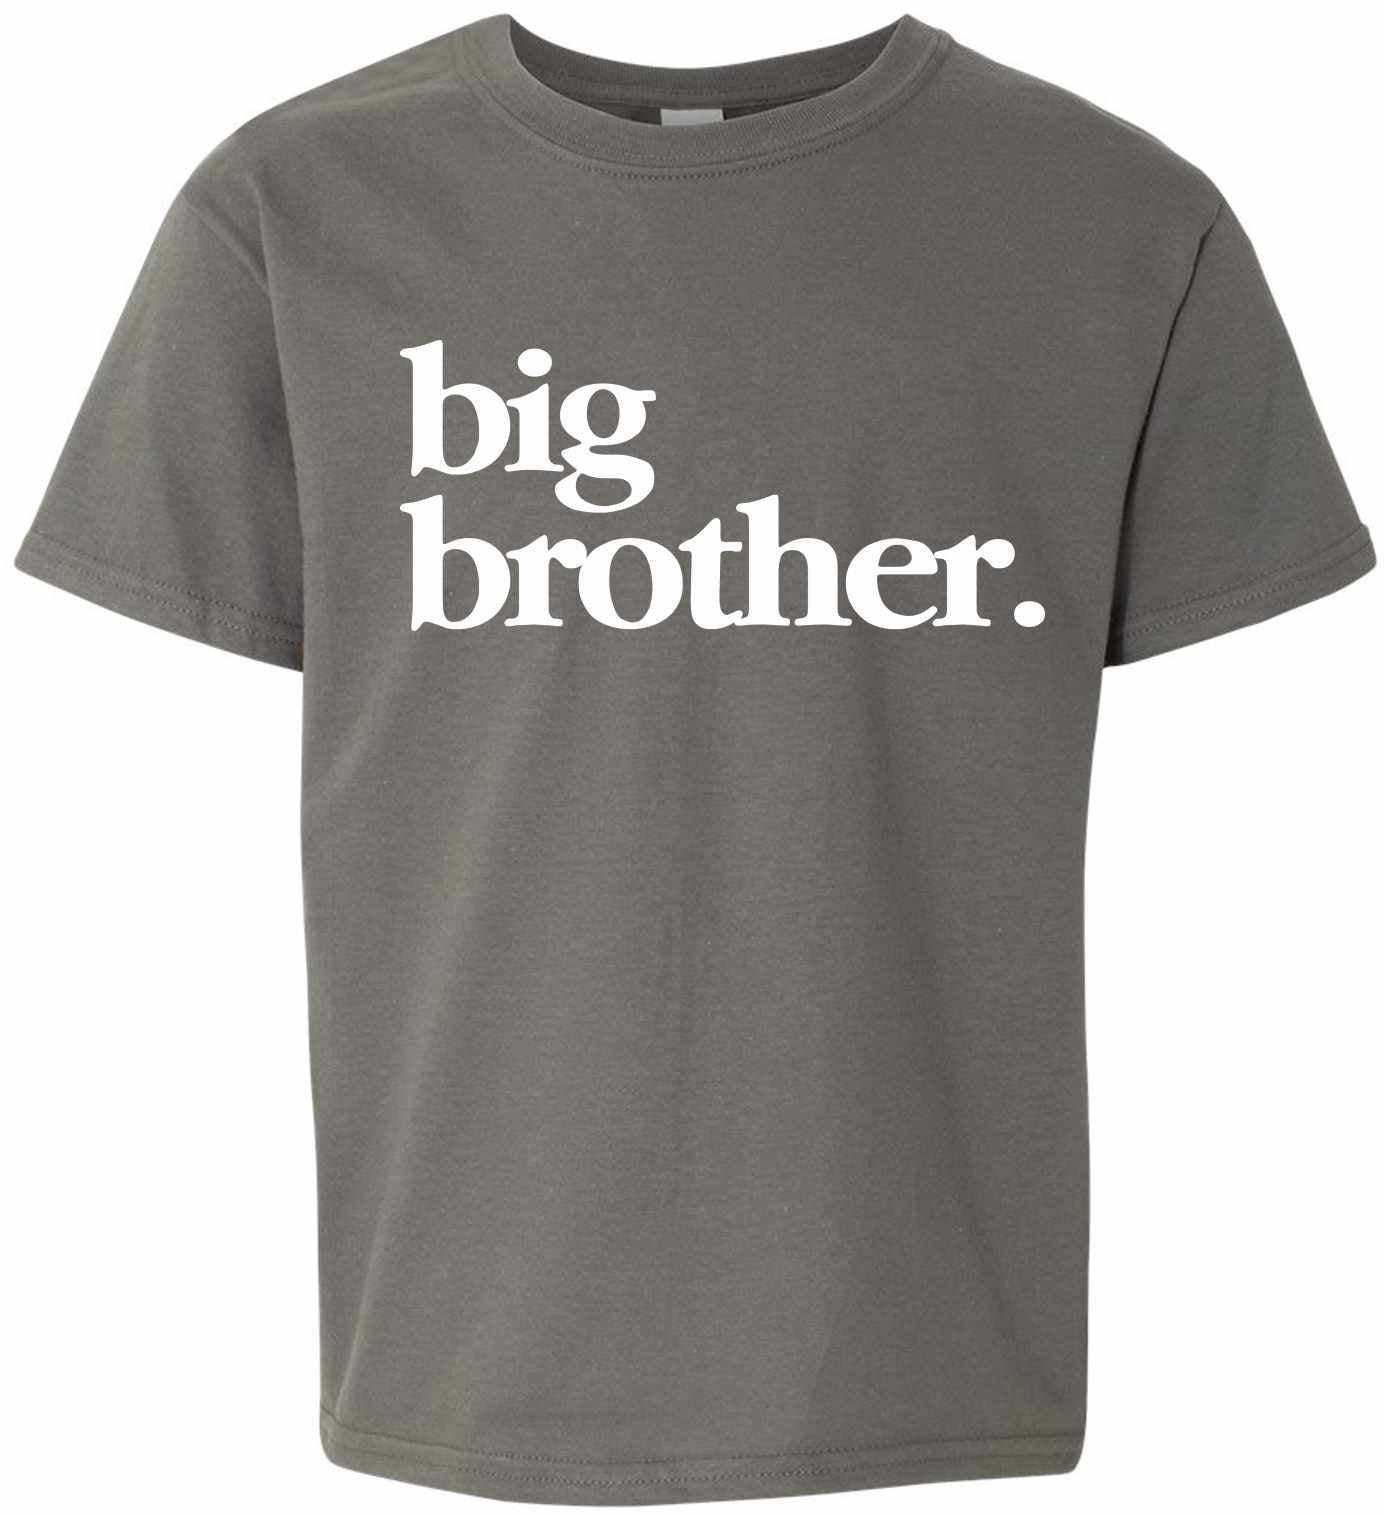 Big Brother on Kids T-Shirt